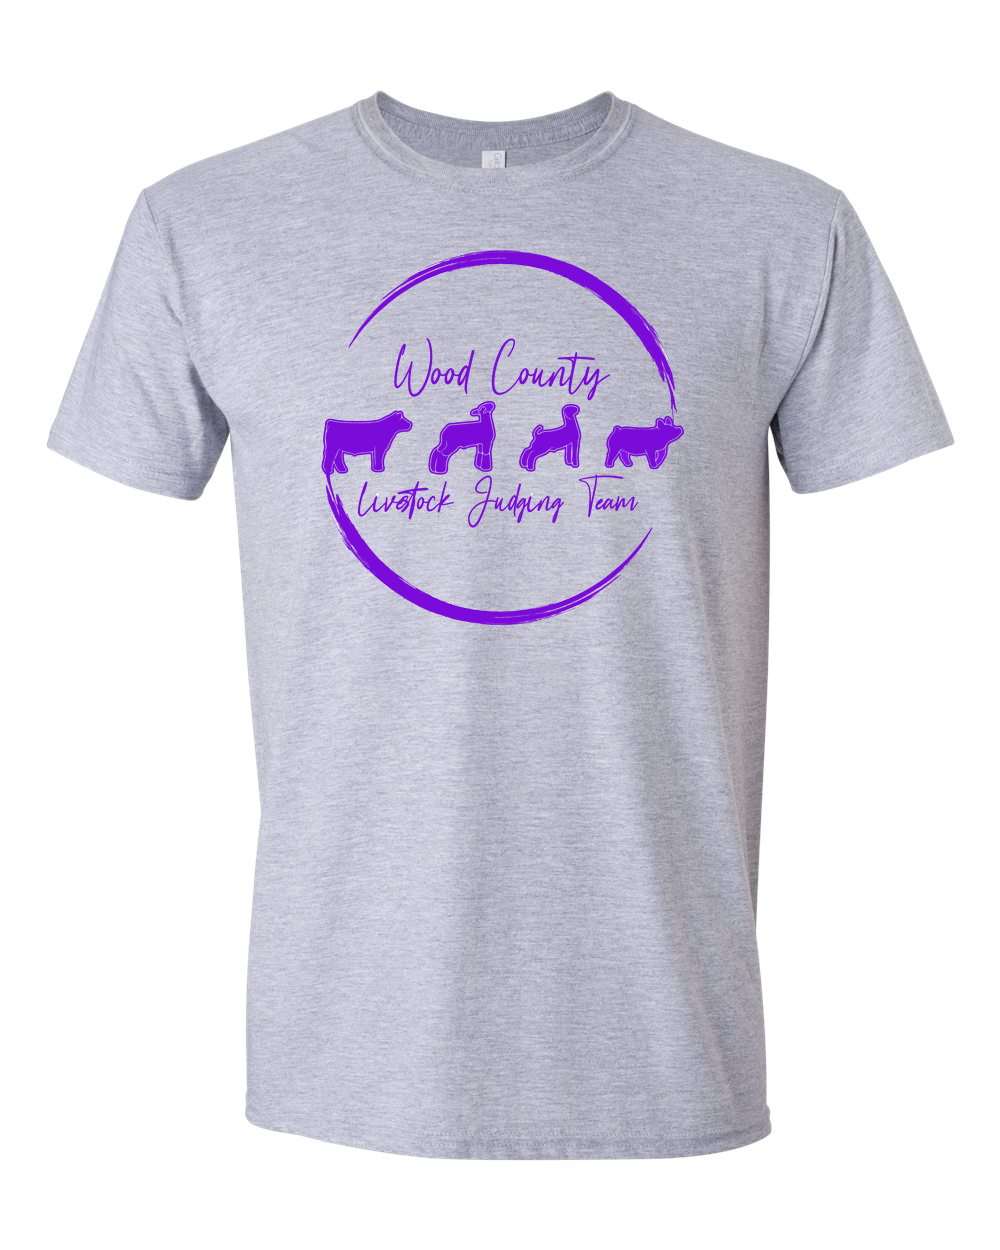 Wood County Livestock Judging ADULT T-Shirt